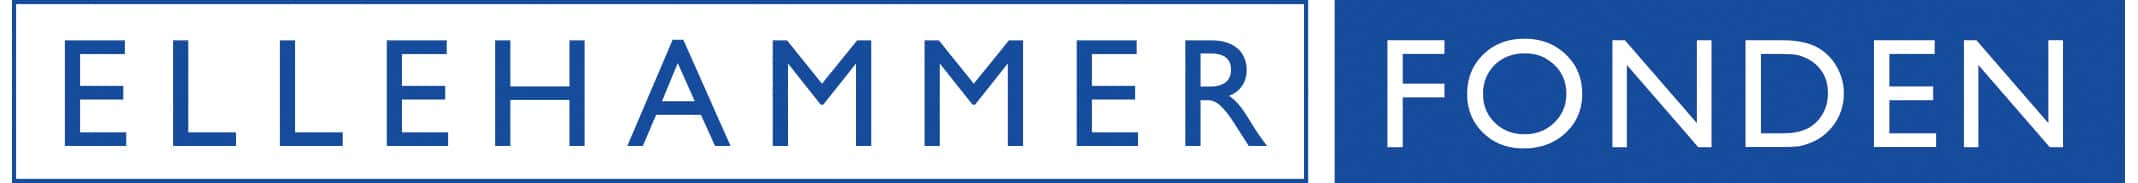 Ellehammerfondens logo